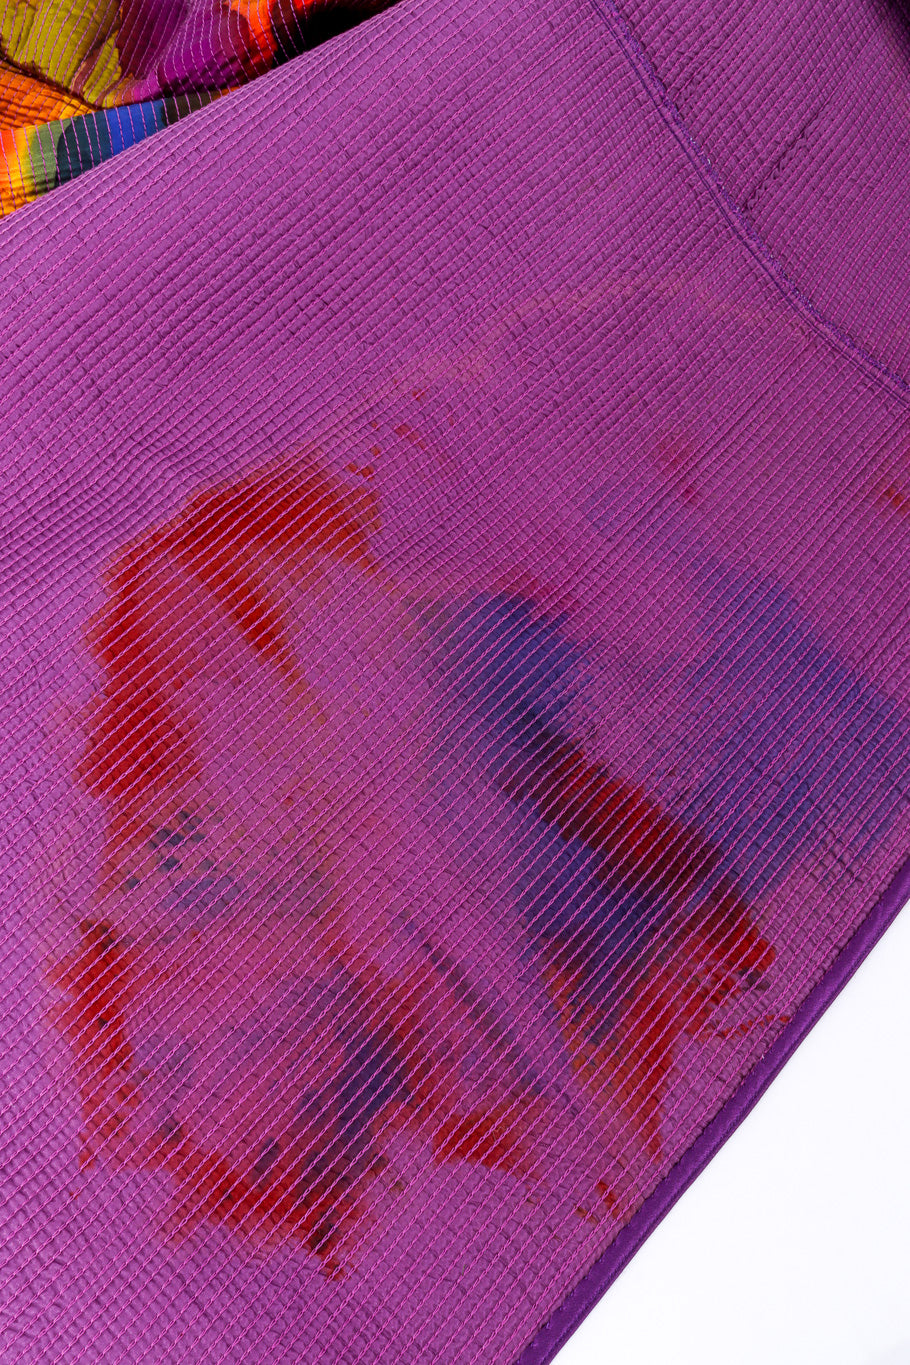 Vintage Mary McFadden Quilted Silk Splotch Jacket water stain closeup @recessla